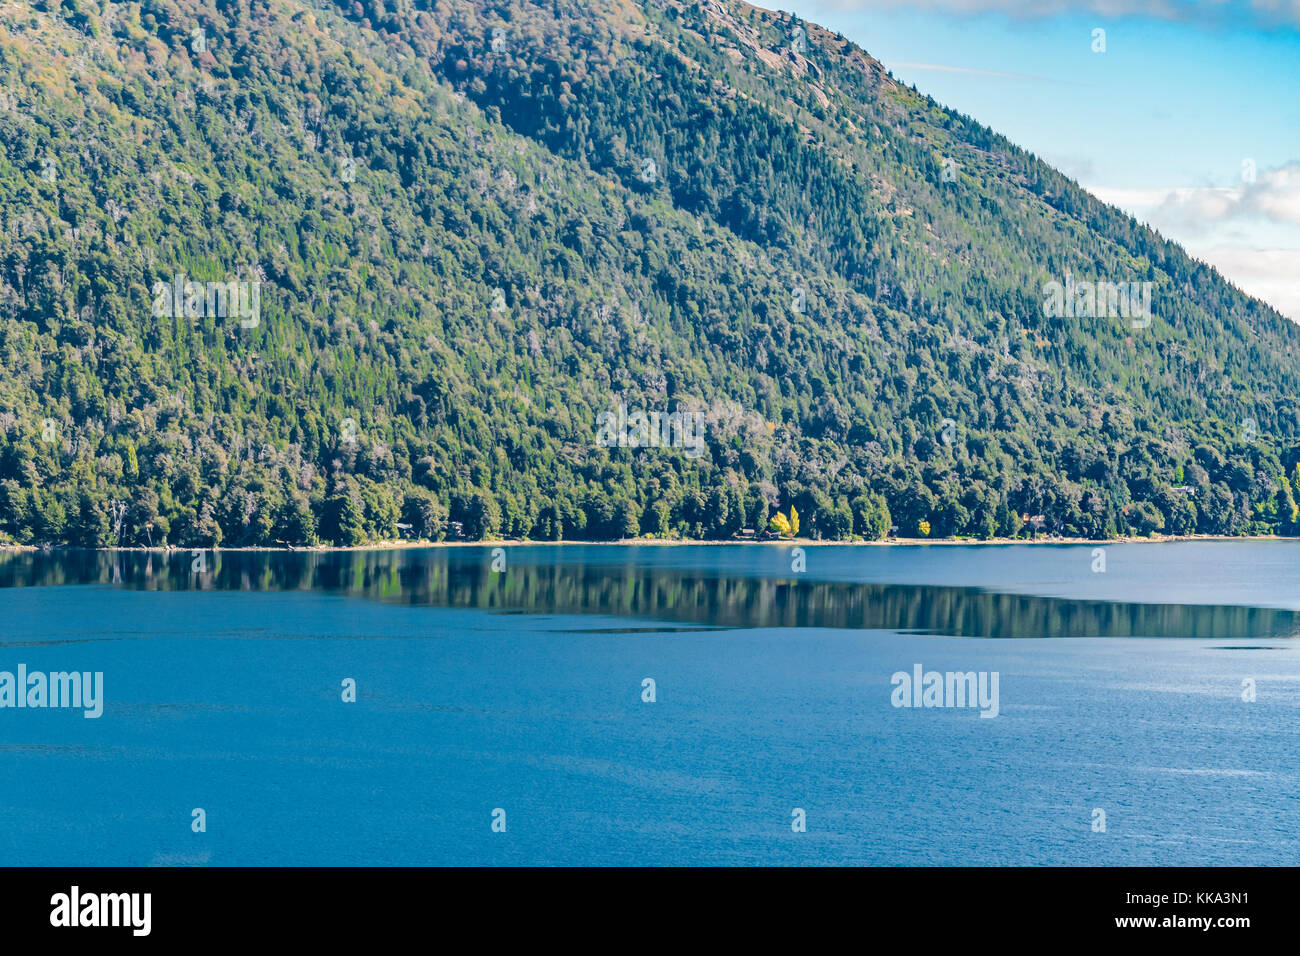 Andes mountains and lake landscape scene at San Carlos de Bariloche, Neuquen province, Argentina Stock Photo